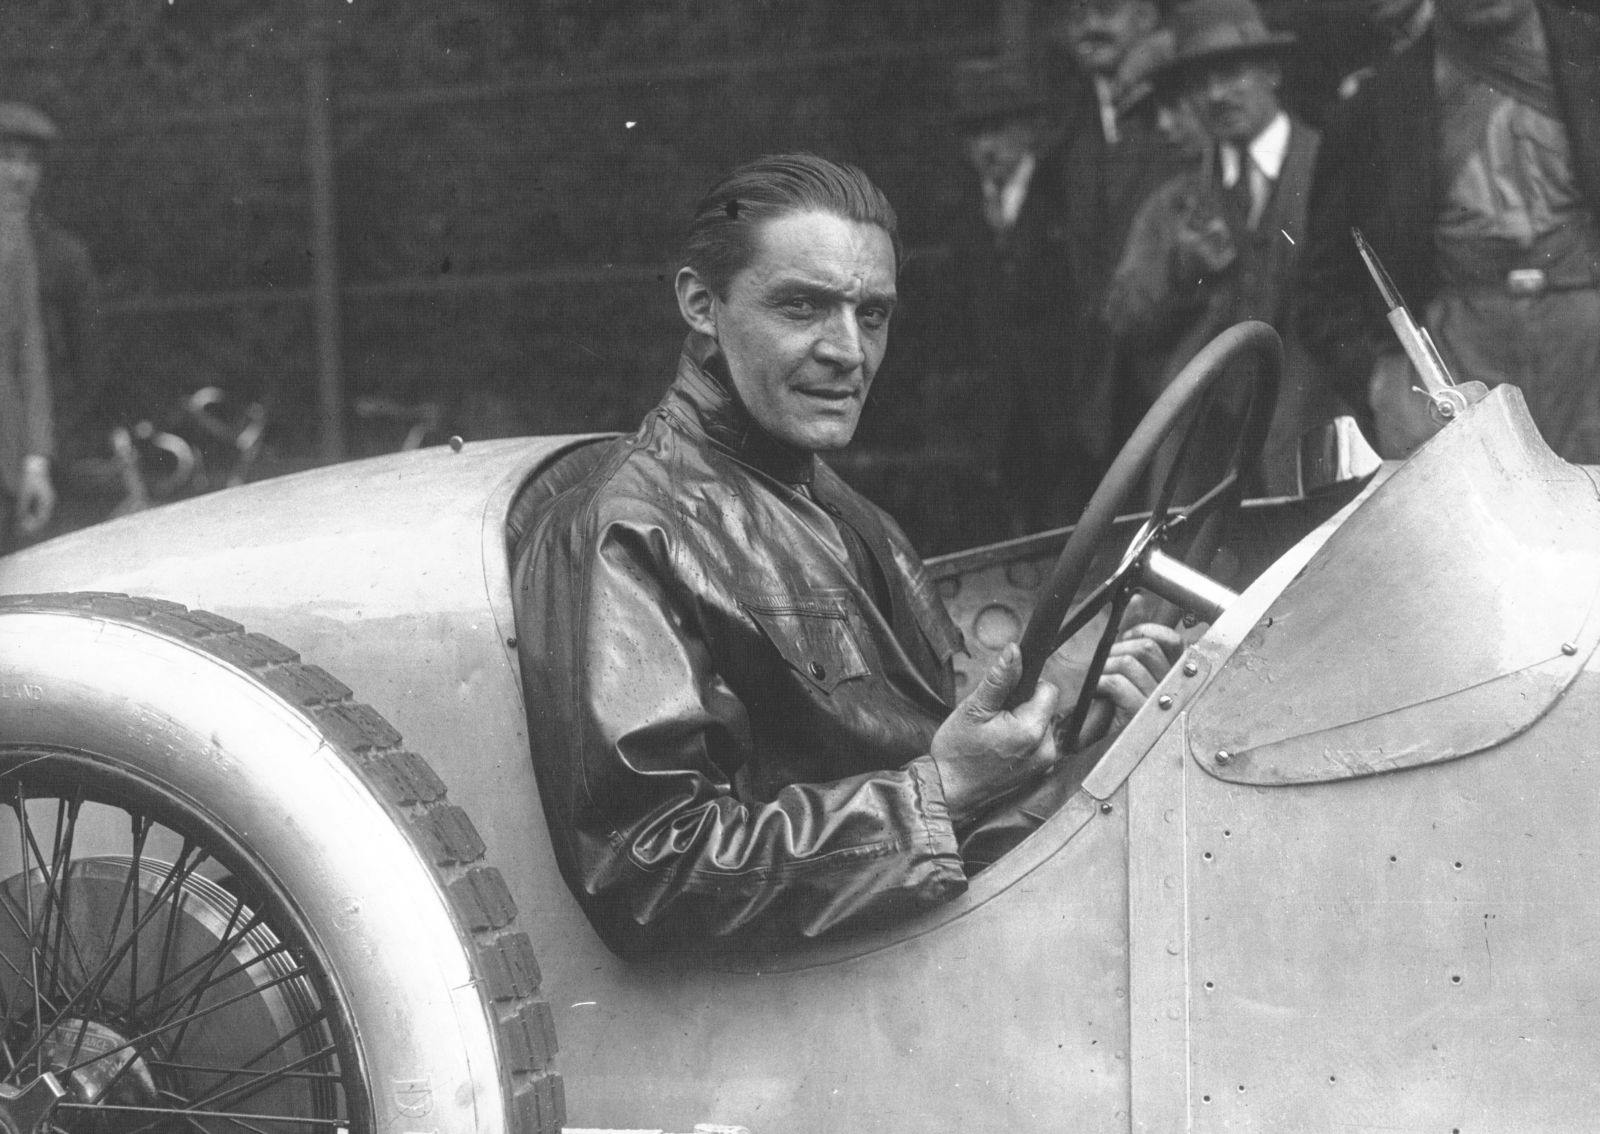 Robert Benoist (1895-1944), Fighter pilot, technician, racing driver and resistance fighter